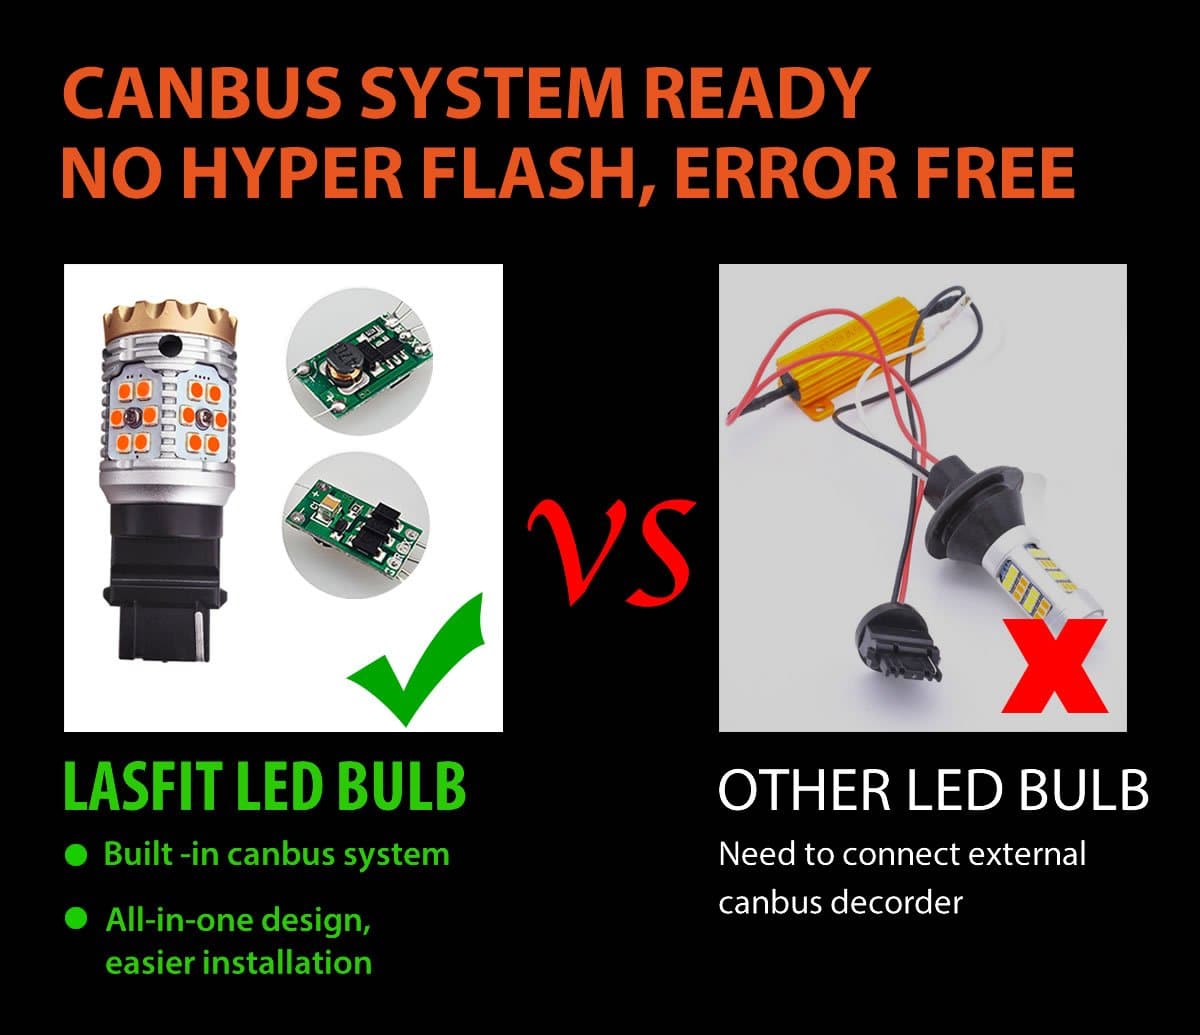 CANBUS Anti Hyper Flash 3156 3056 LED Turn Signal Lights